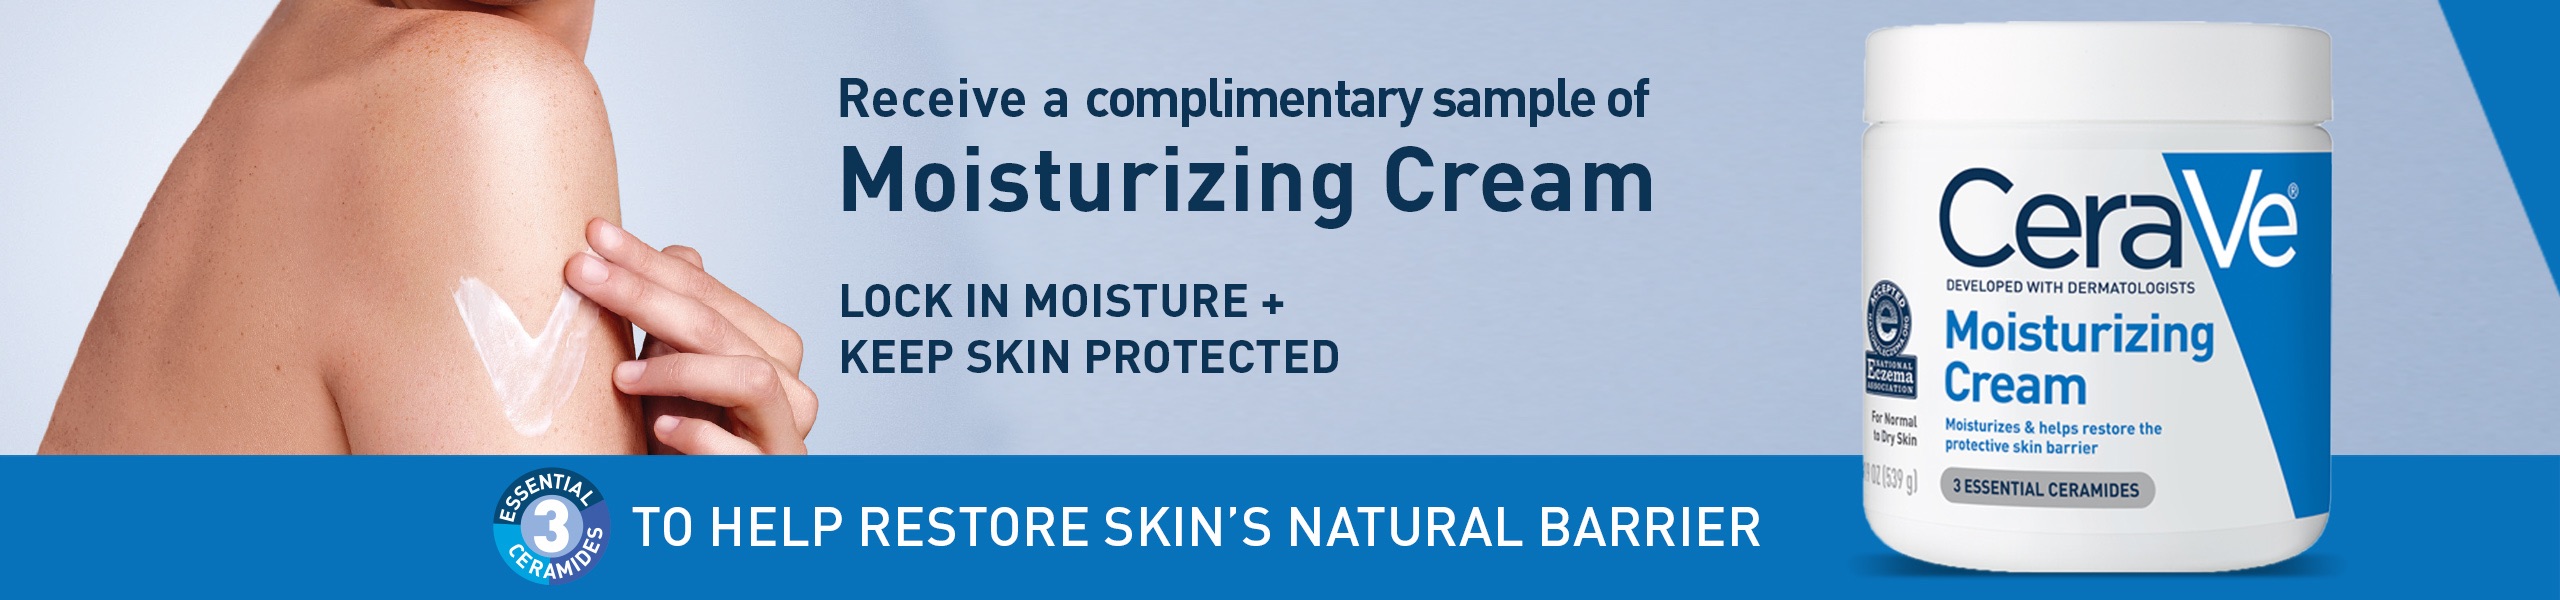 Free CeraVe Skincare Sample